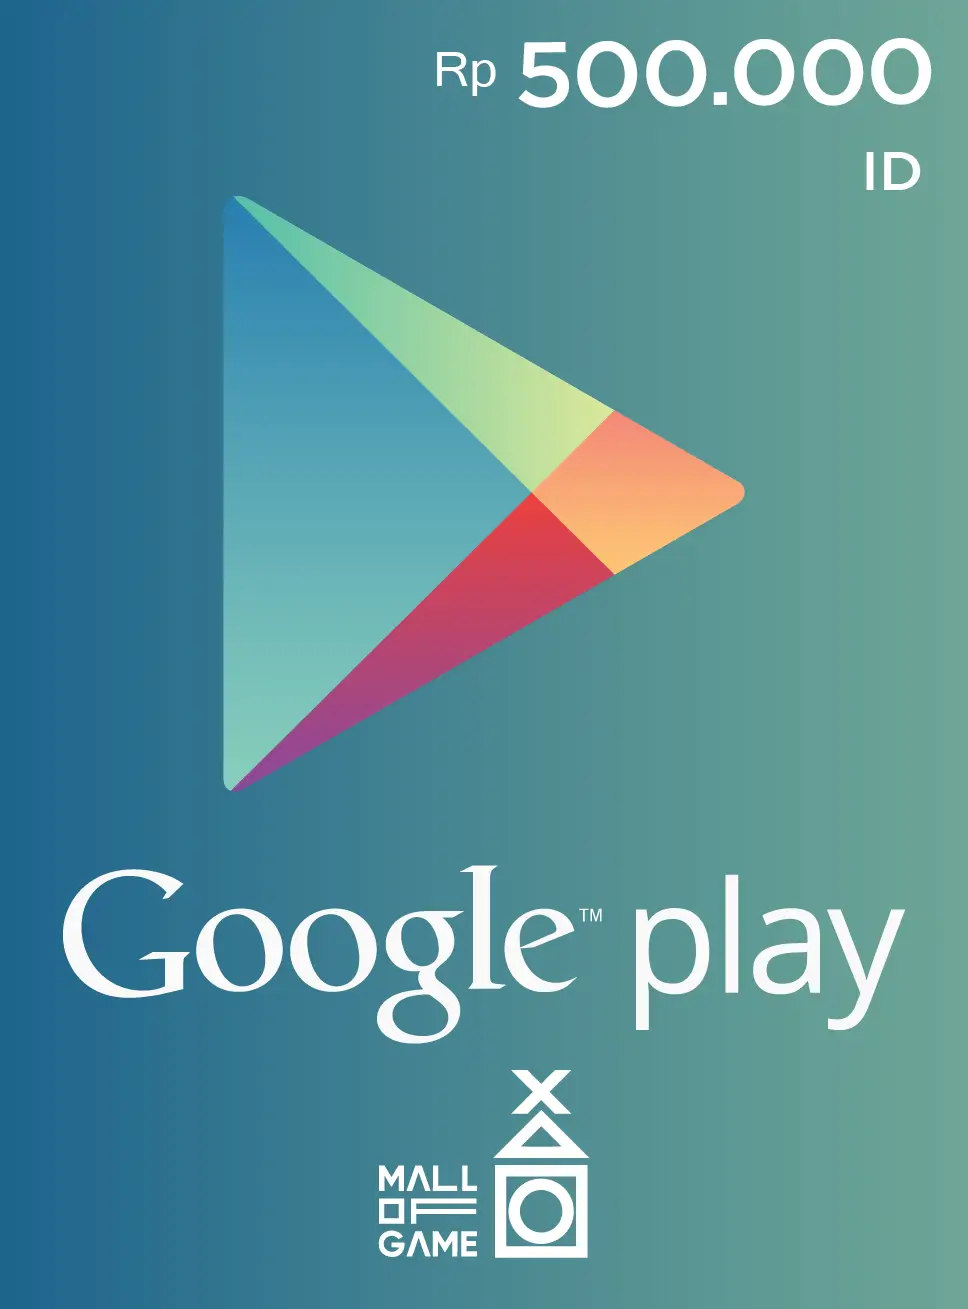 Google Play IDR500,000 Gift Card (ID)